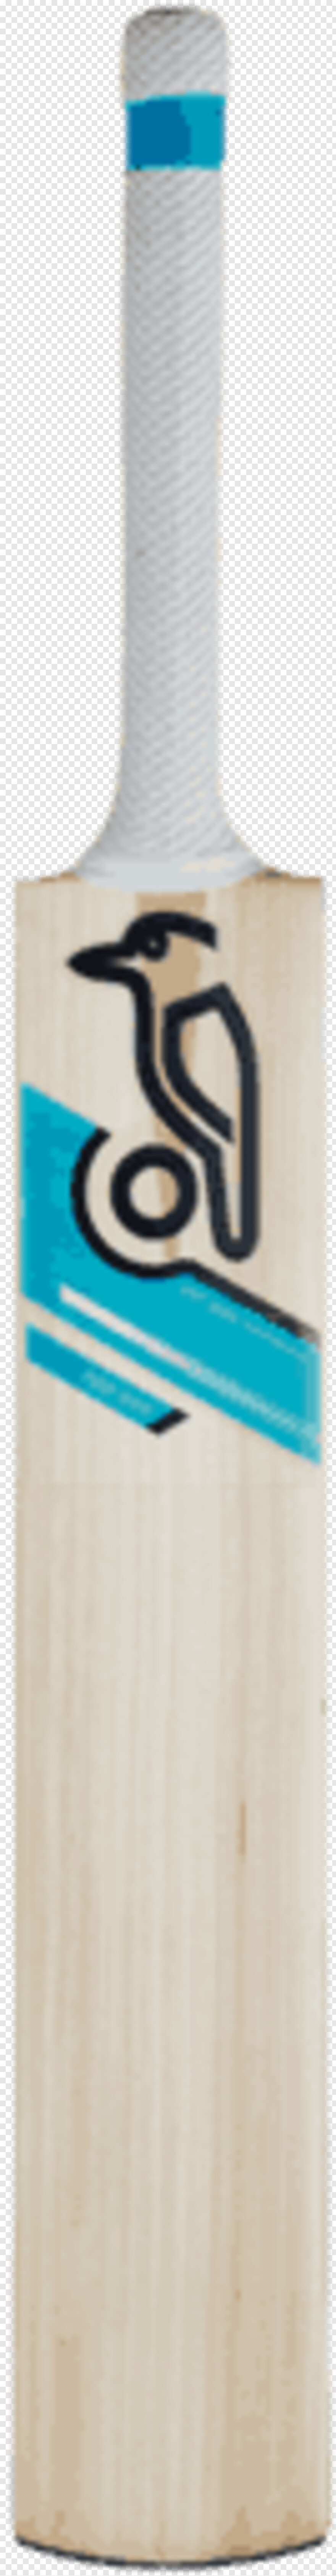  Cricket Clipart, Cricket Vector, Cricket Images, Cricket Cup, Cricket Kit, Cricket Bat And Ball